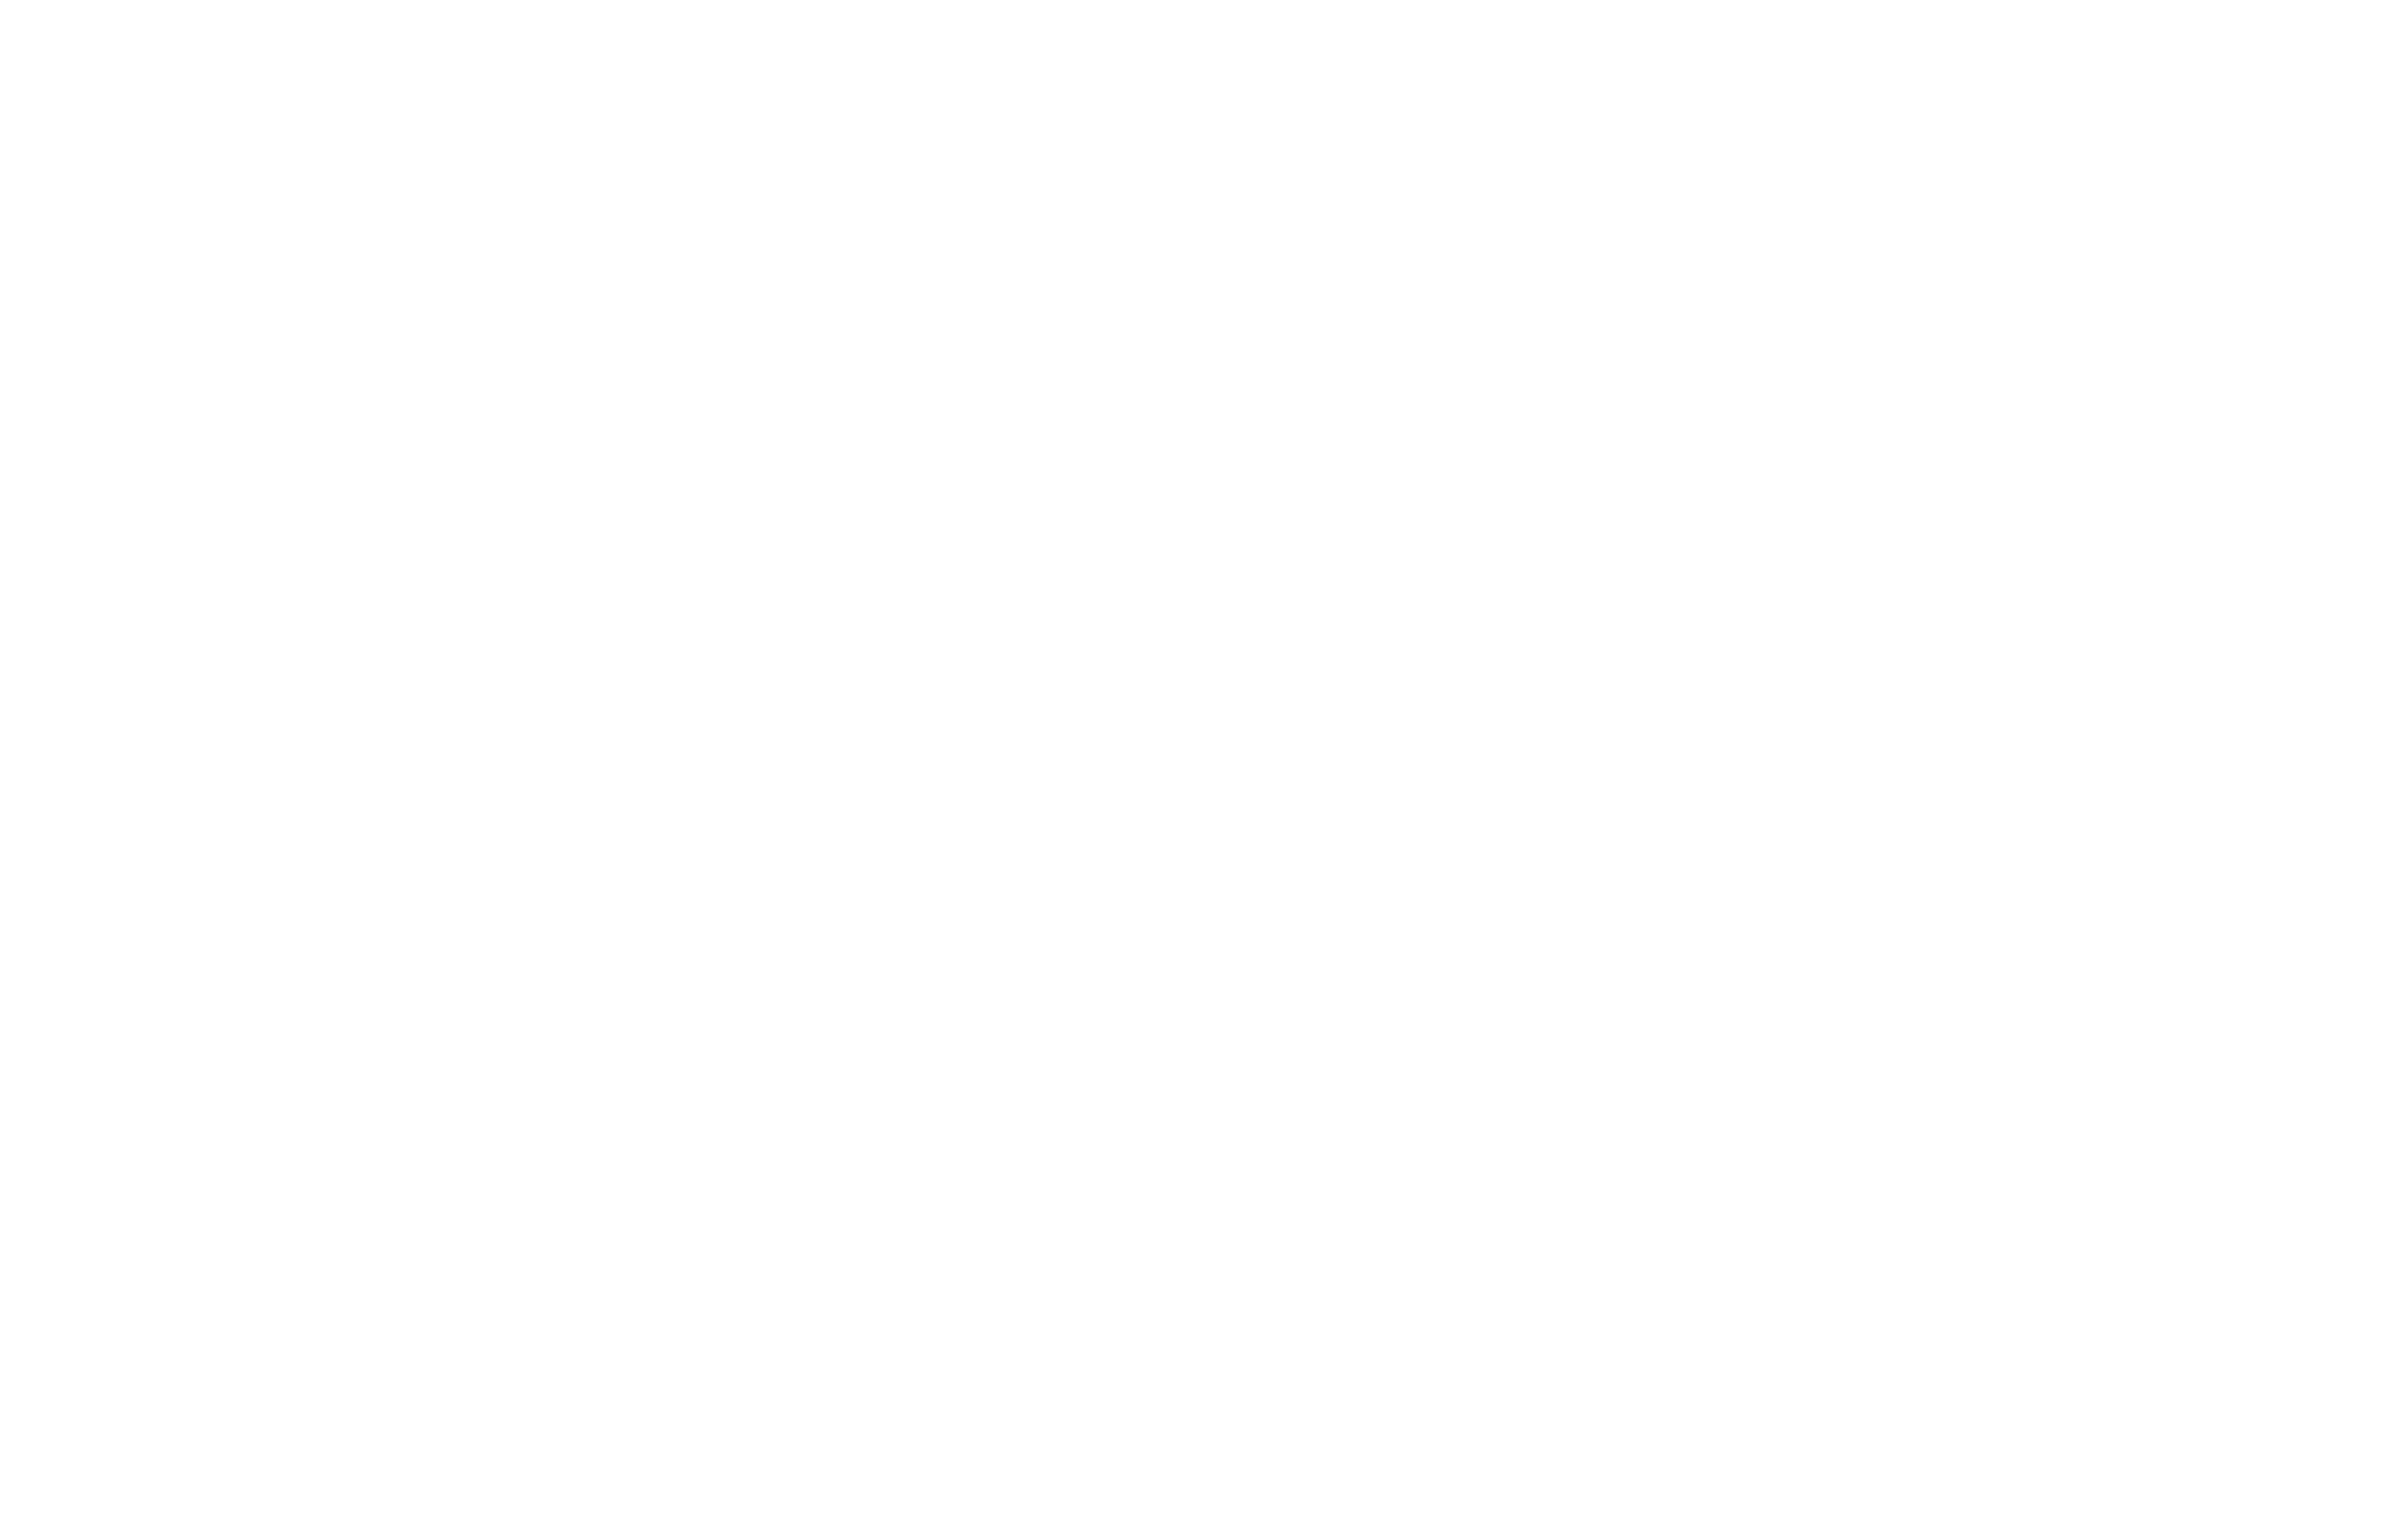 Hoodstock